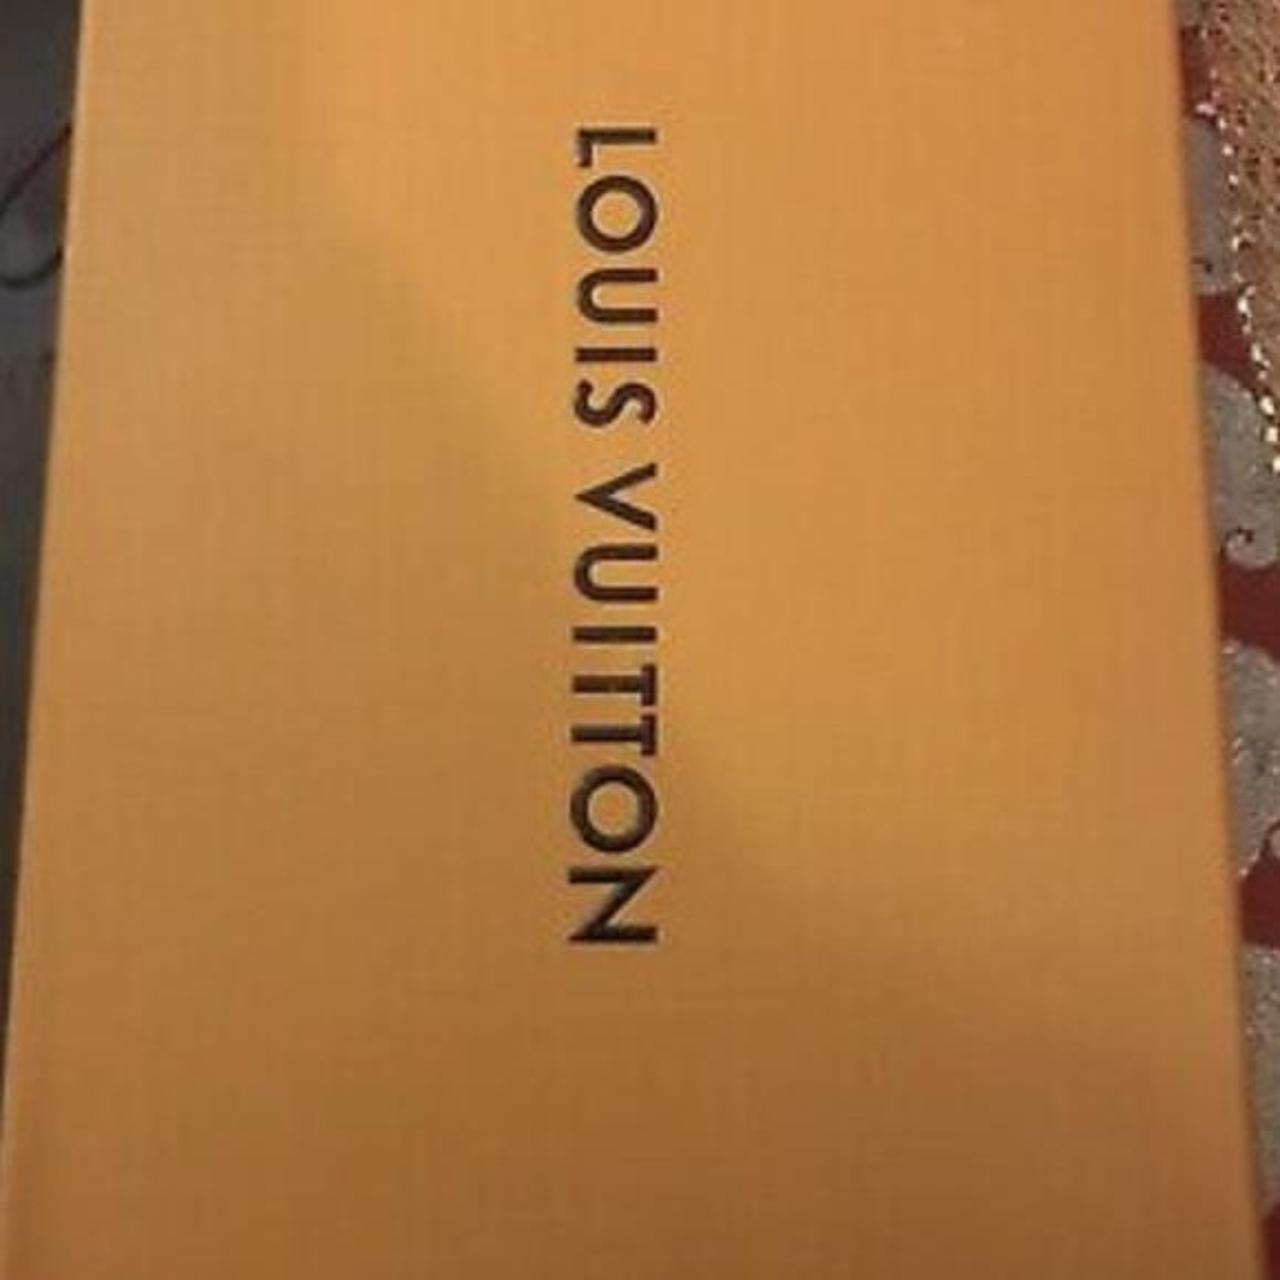 Brand new Louis Vuitton Scarf😍 unworn box and - Depop